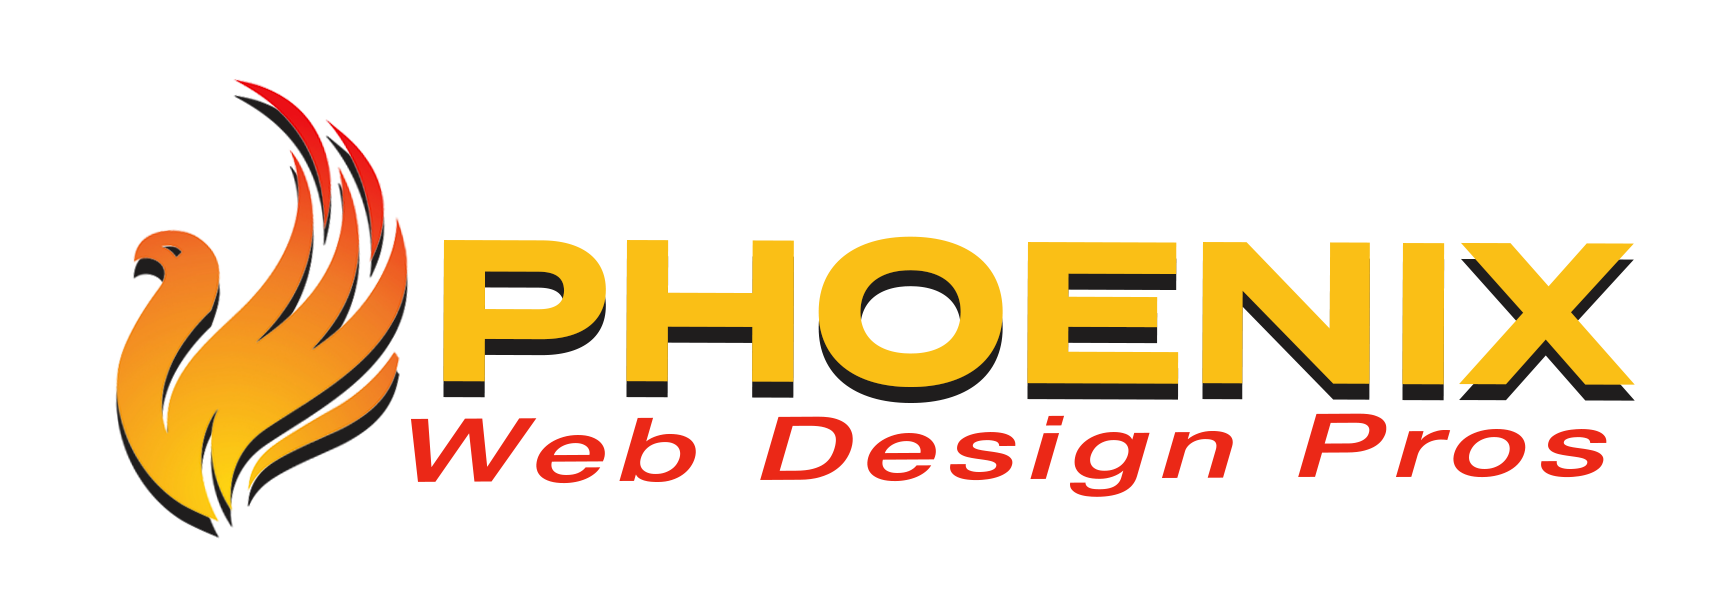 web design company in phoenix